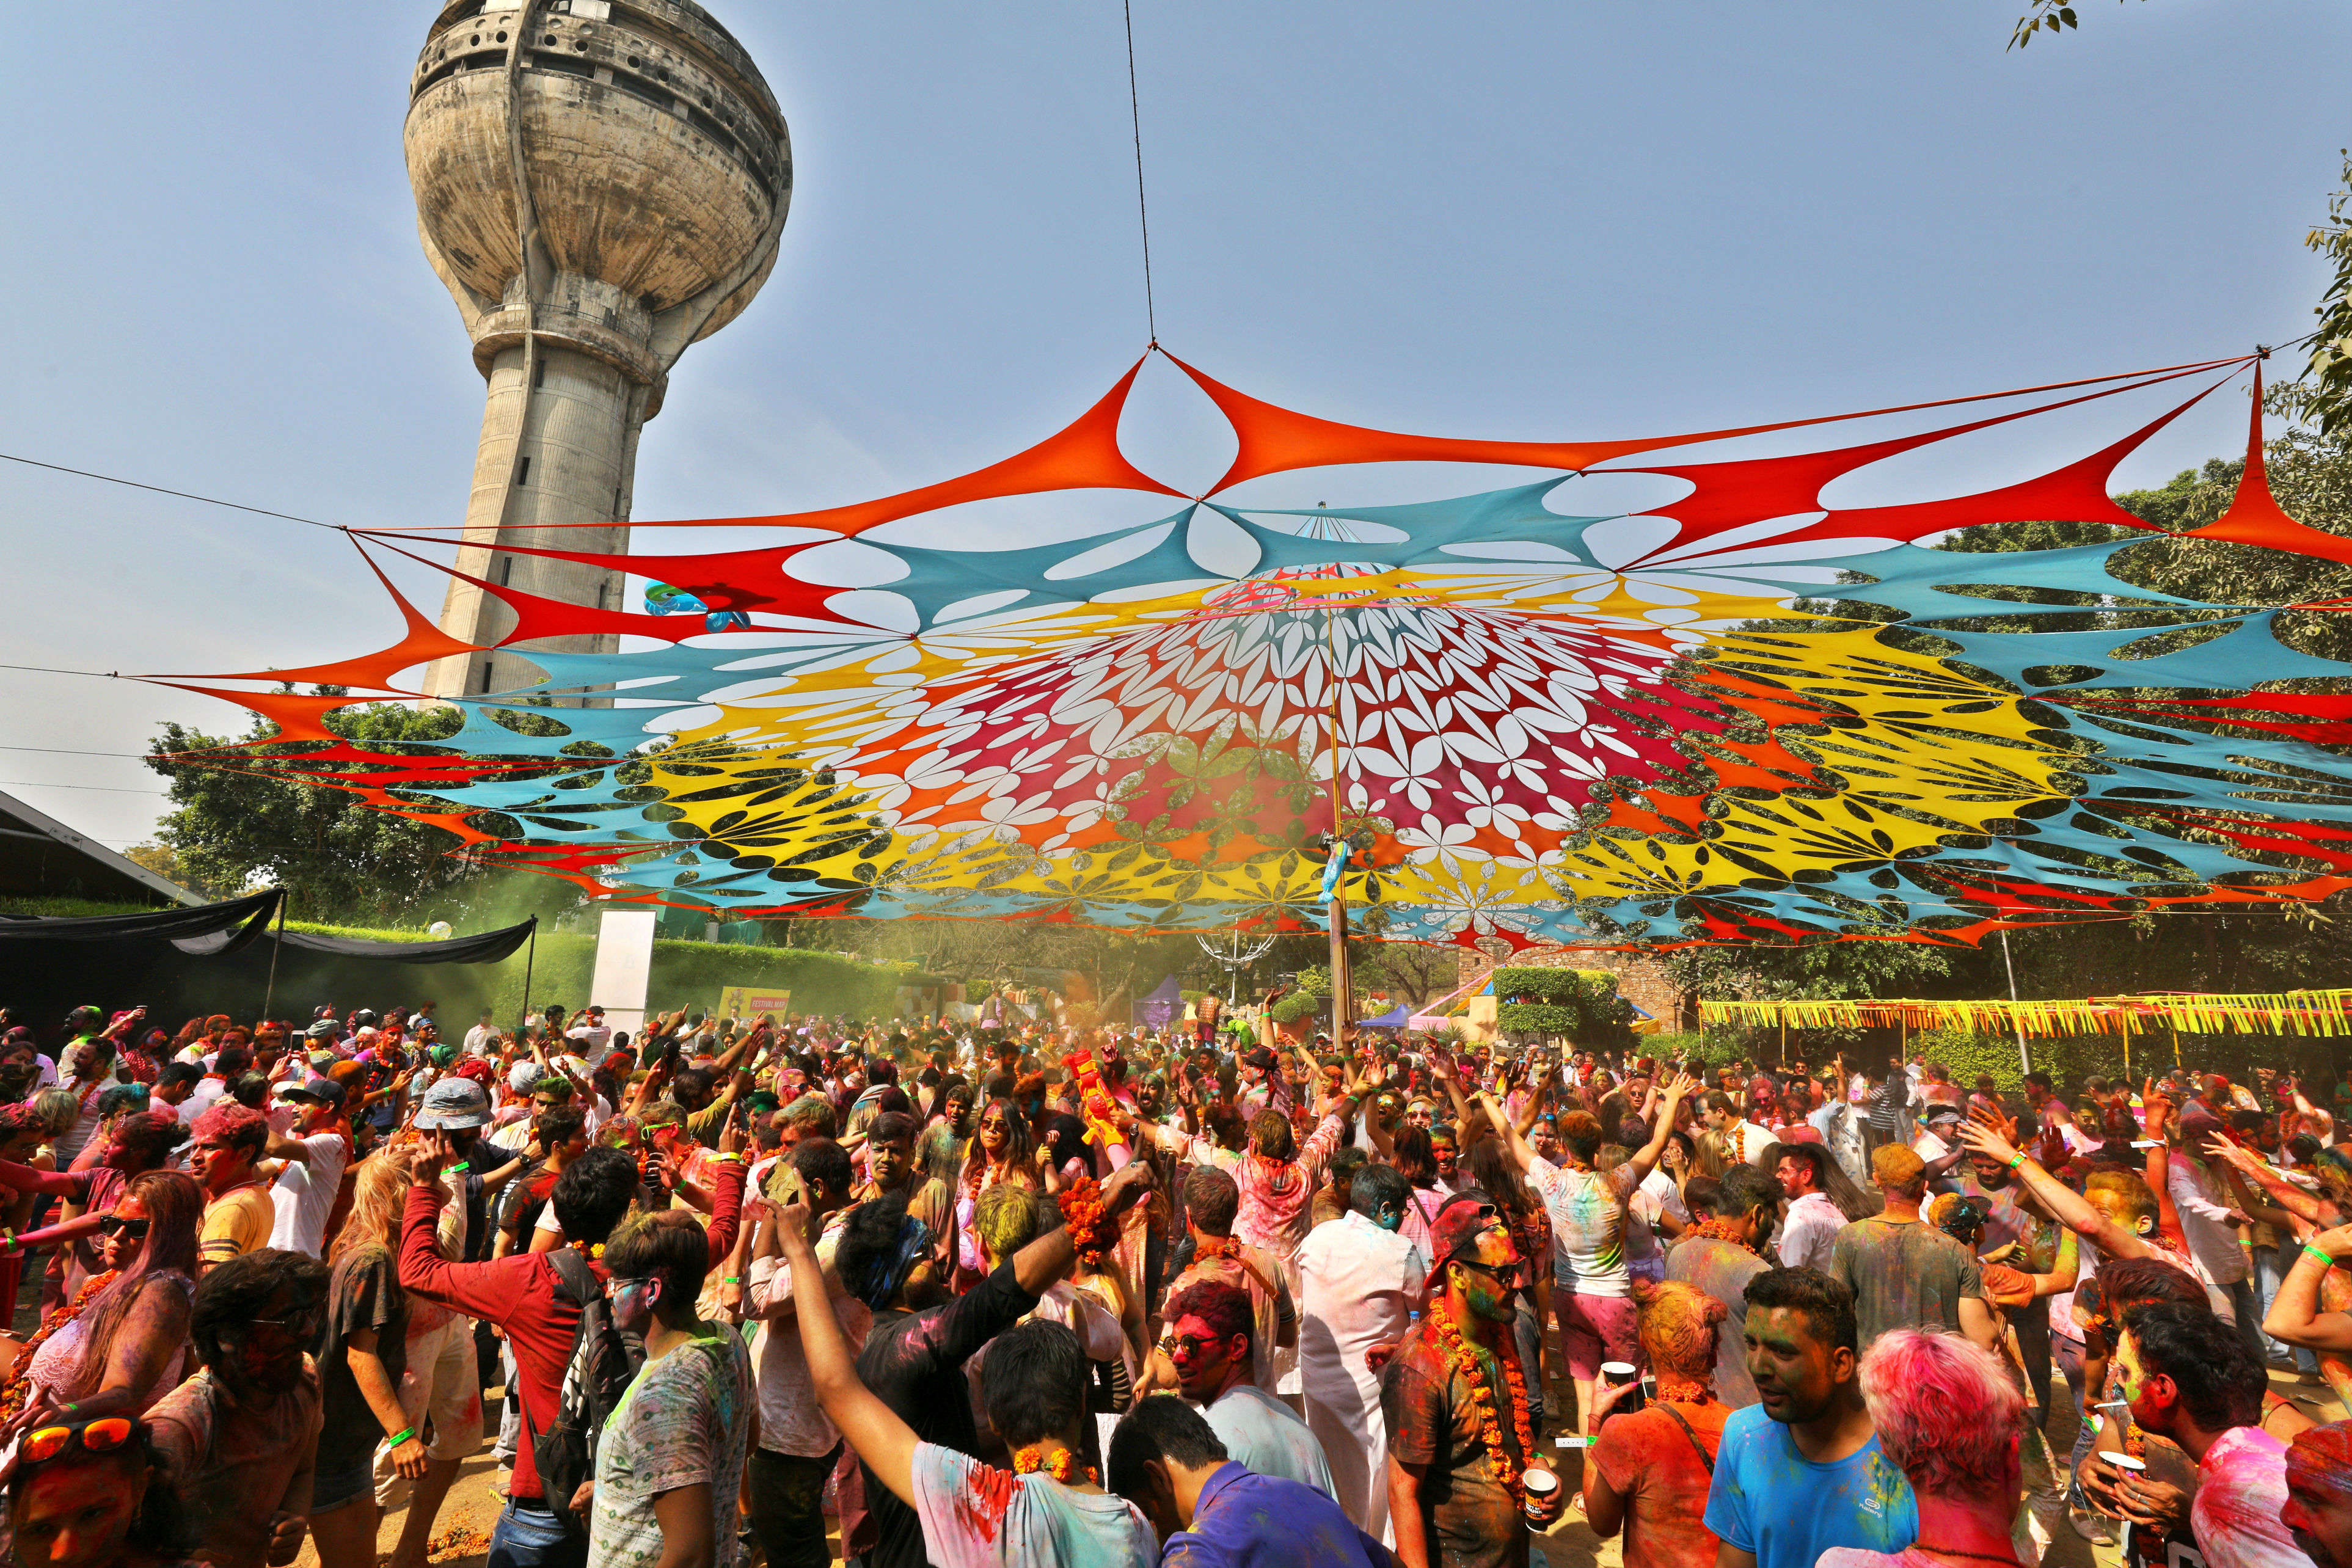 Delhi gears up for the Holi Moo! Festival this Holi